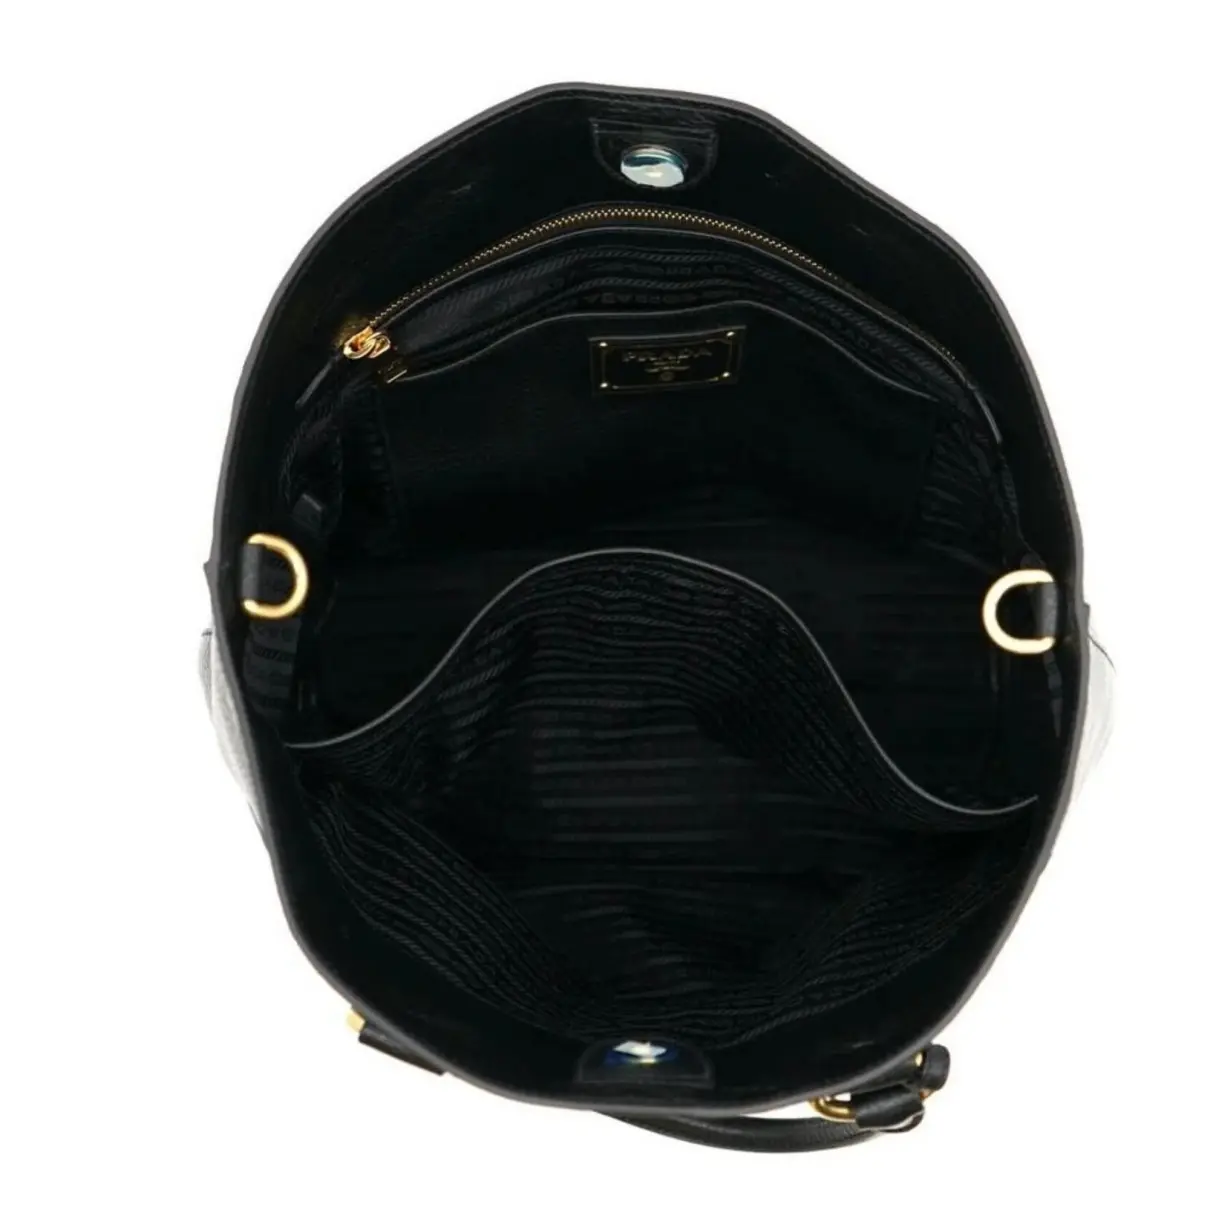 Saffiano leather satchel Prada